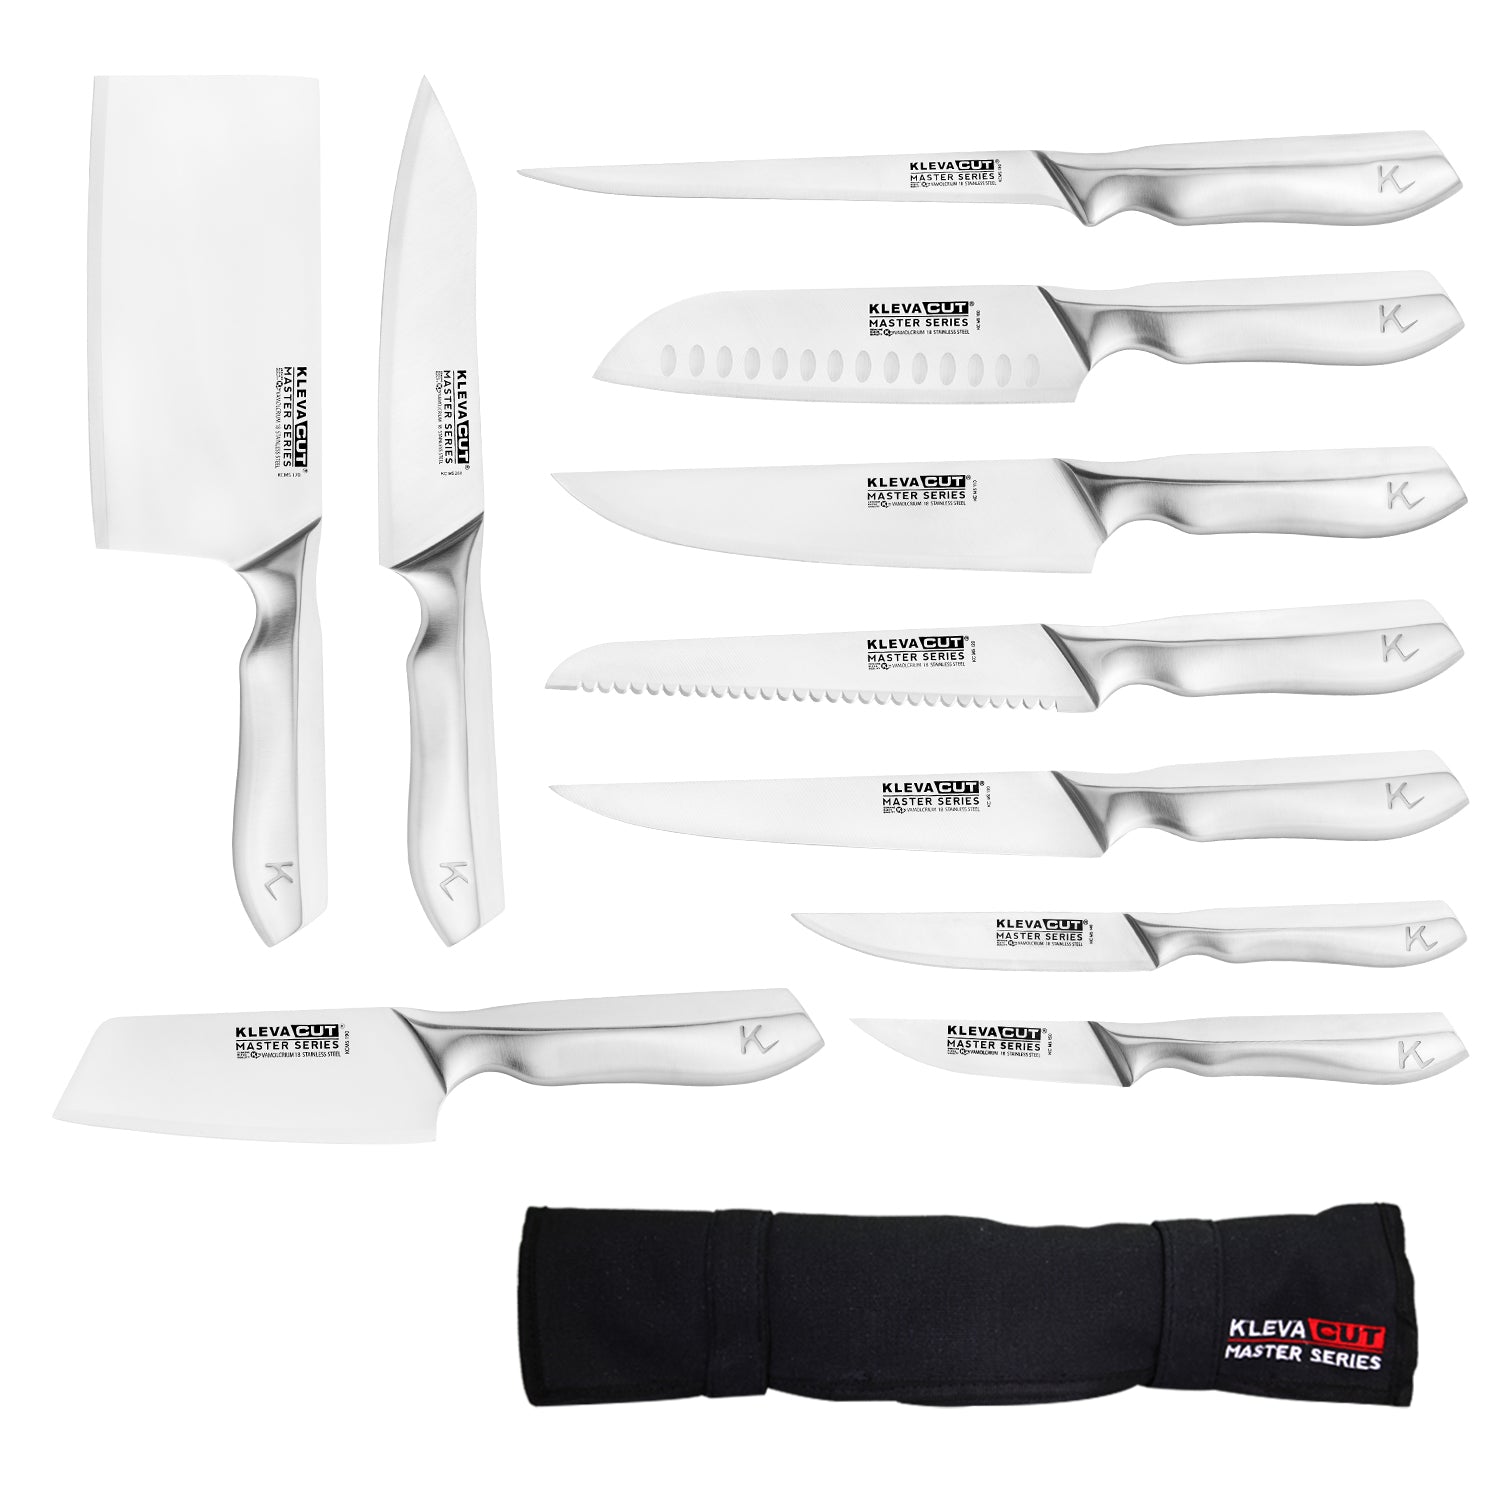 KlevaCut® Master Series Set 10pc Complete Professional Chef Knife Set! Kitchen Knives Kleva Range   